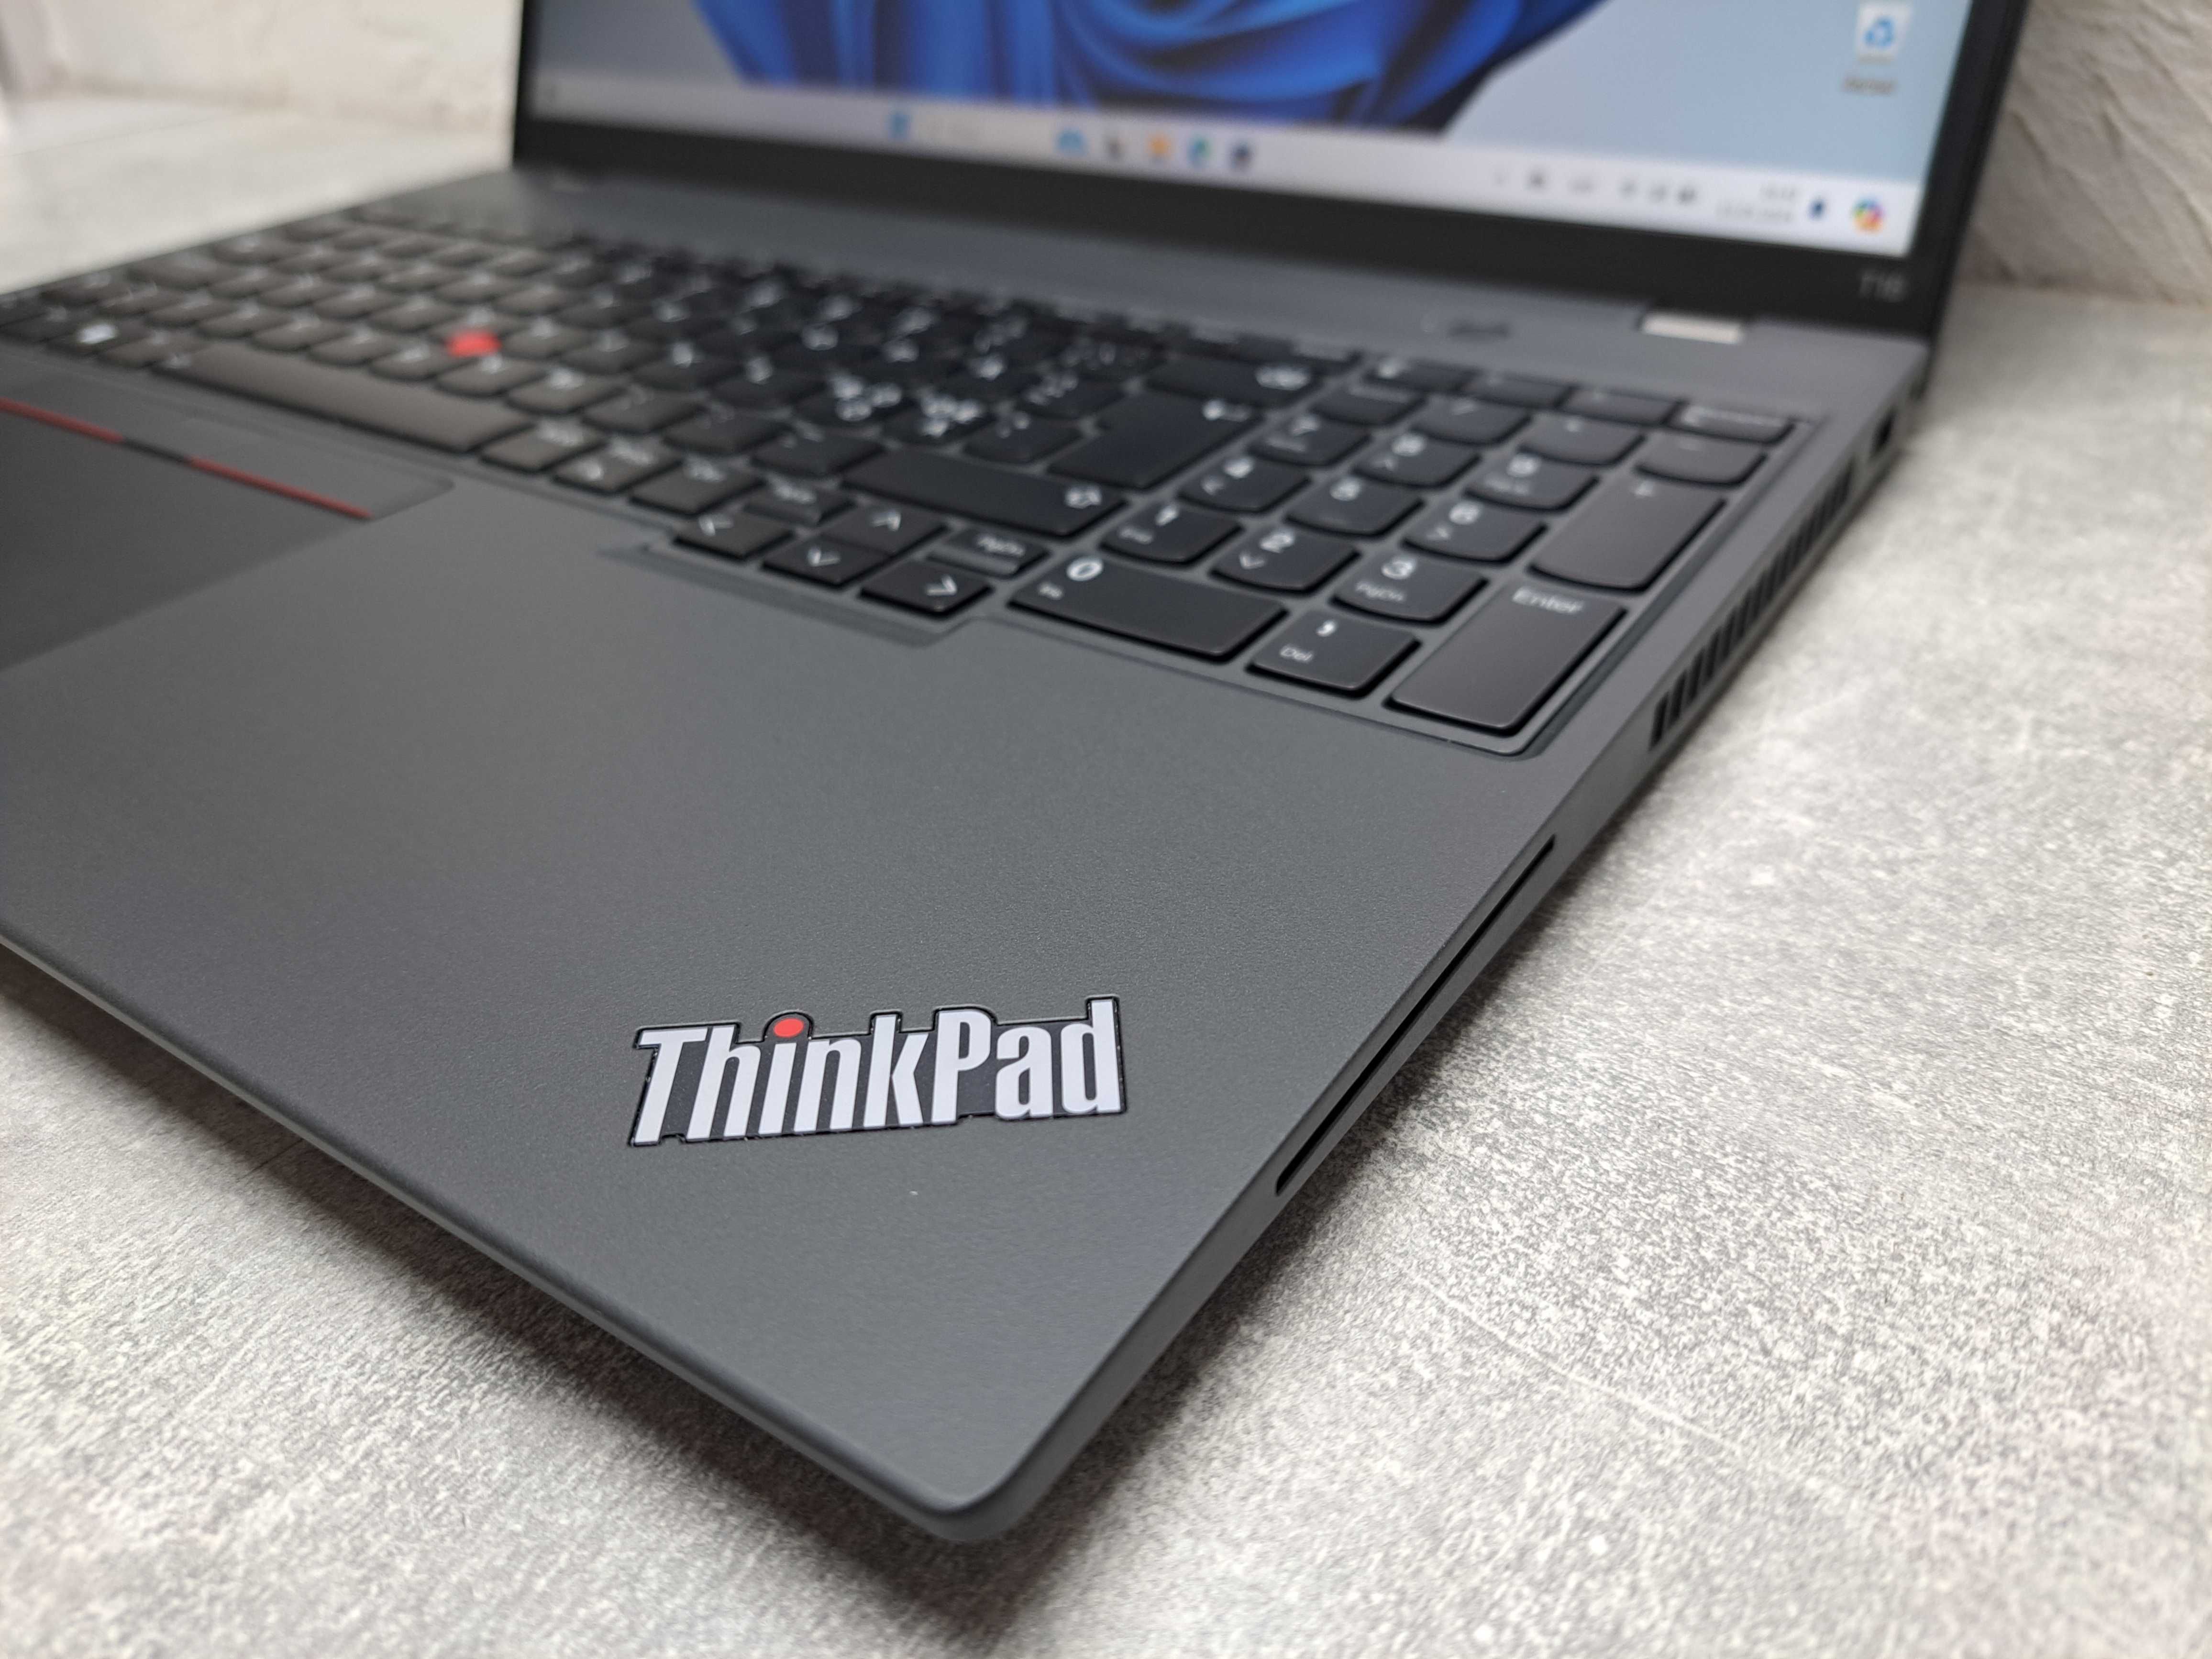 Lenovo ThinkPad T16 Gen1 i7-1255U 16Ram SSD512 16" FHD IPS